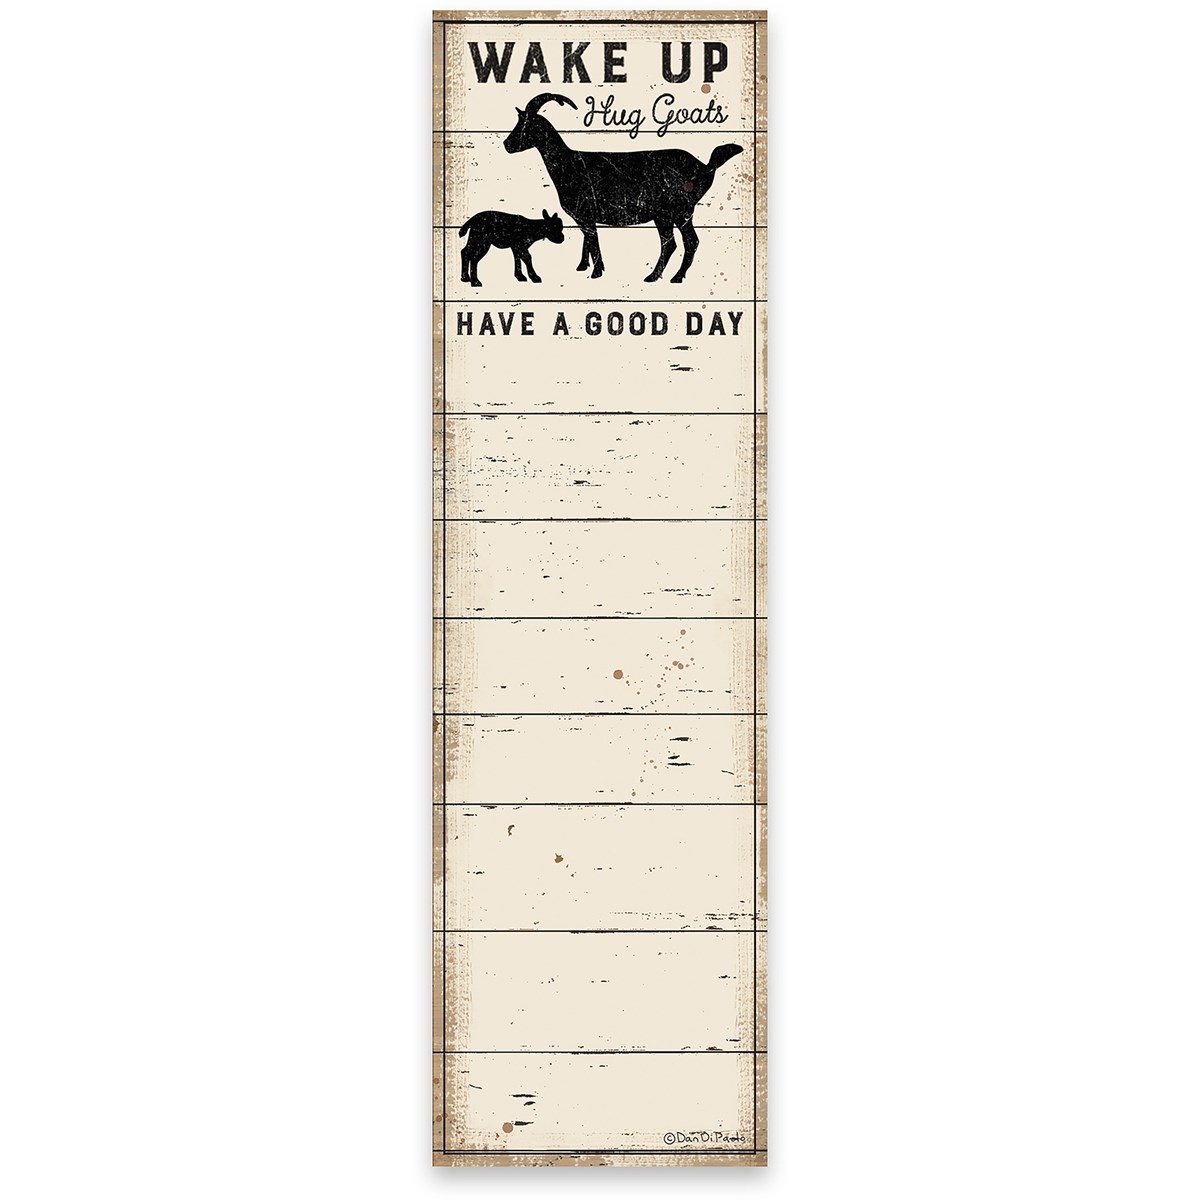 Wake Up Hug Goats List Pad - Paper, Magnet